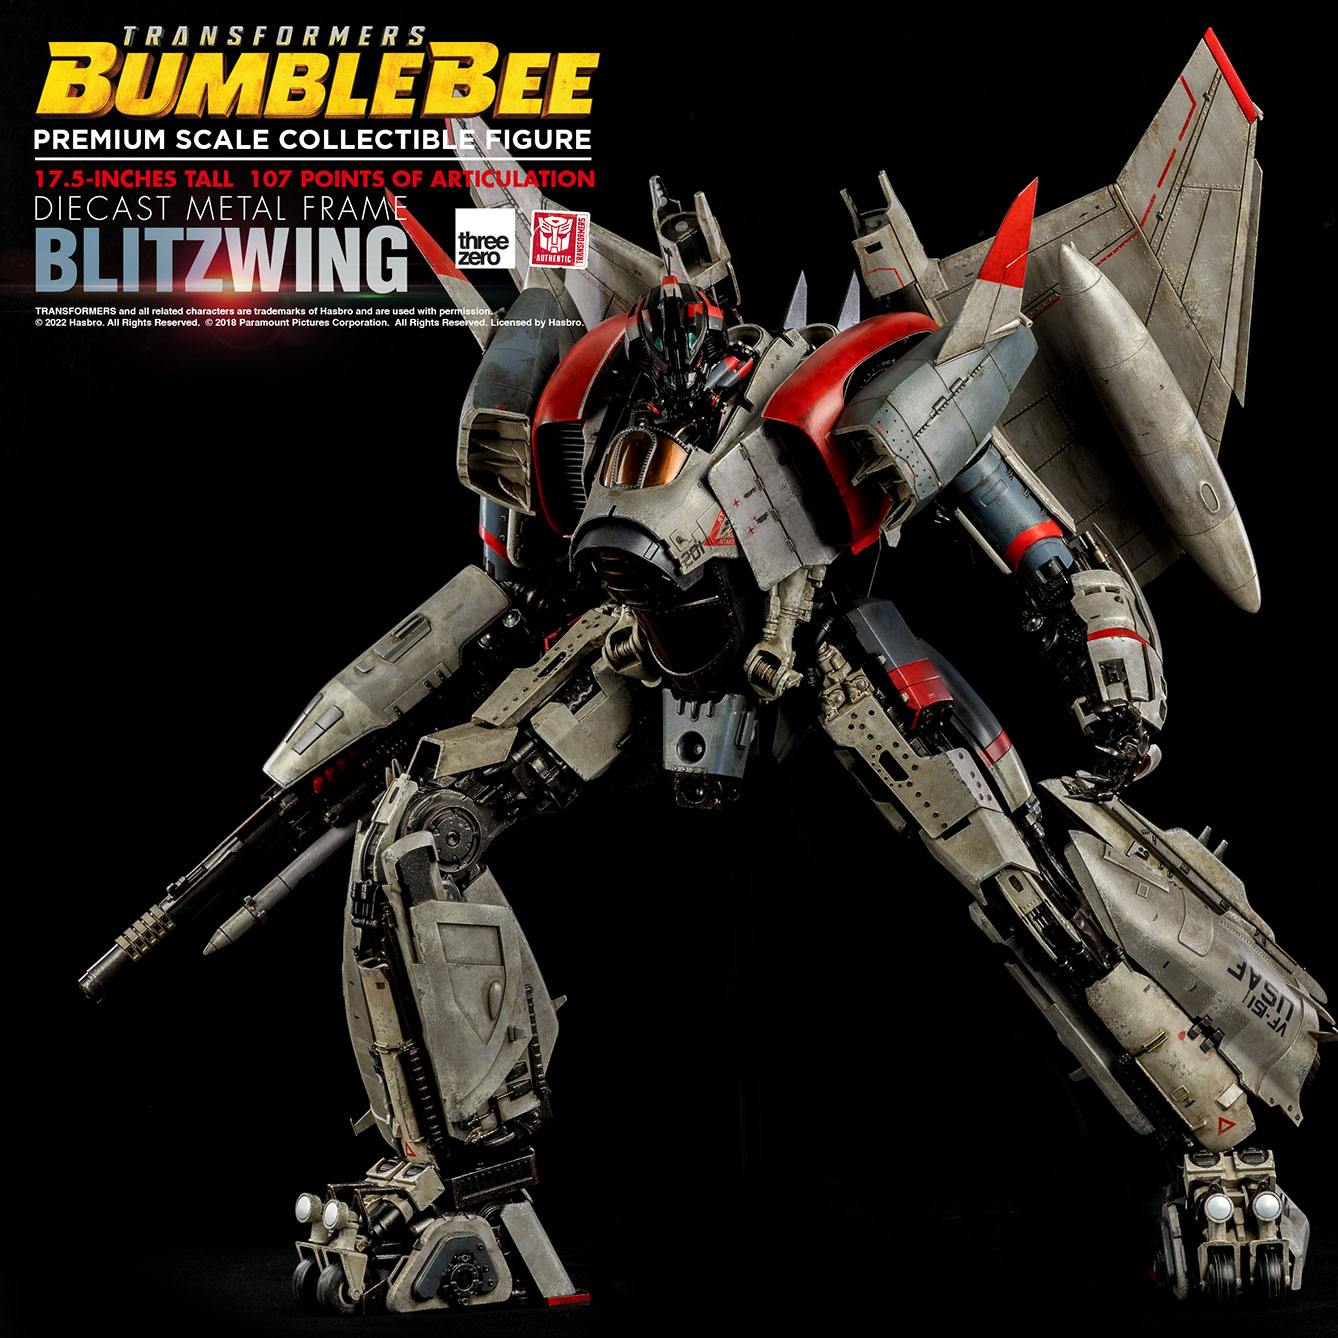 Transformers Bumblebee, PREMIUM Blitzwing